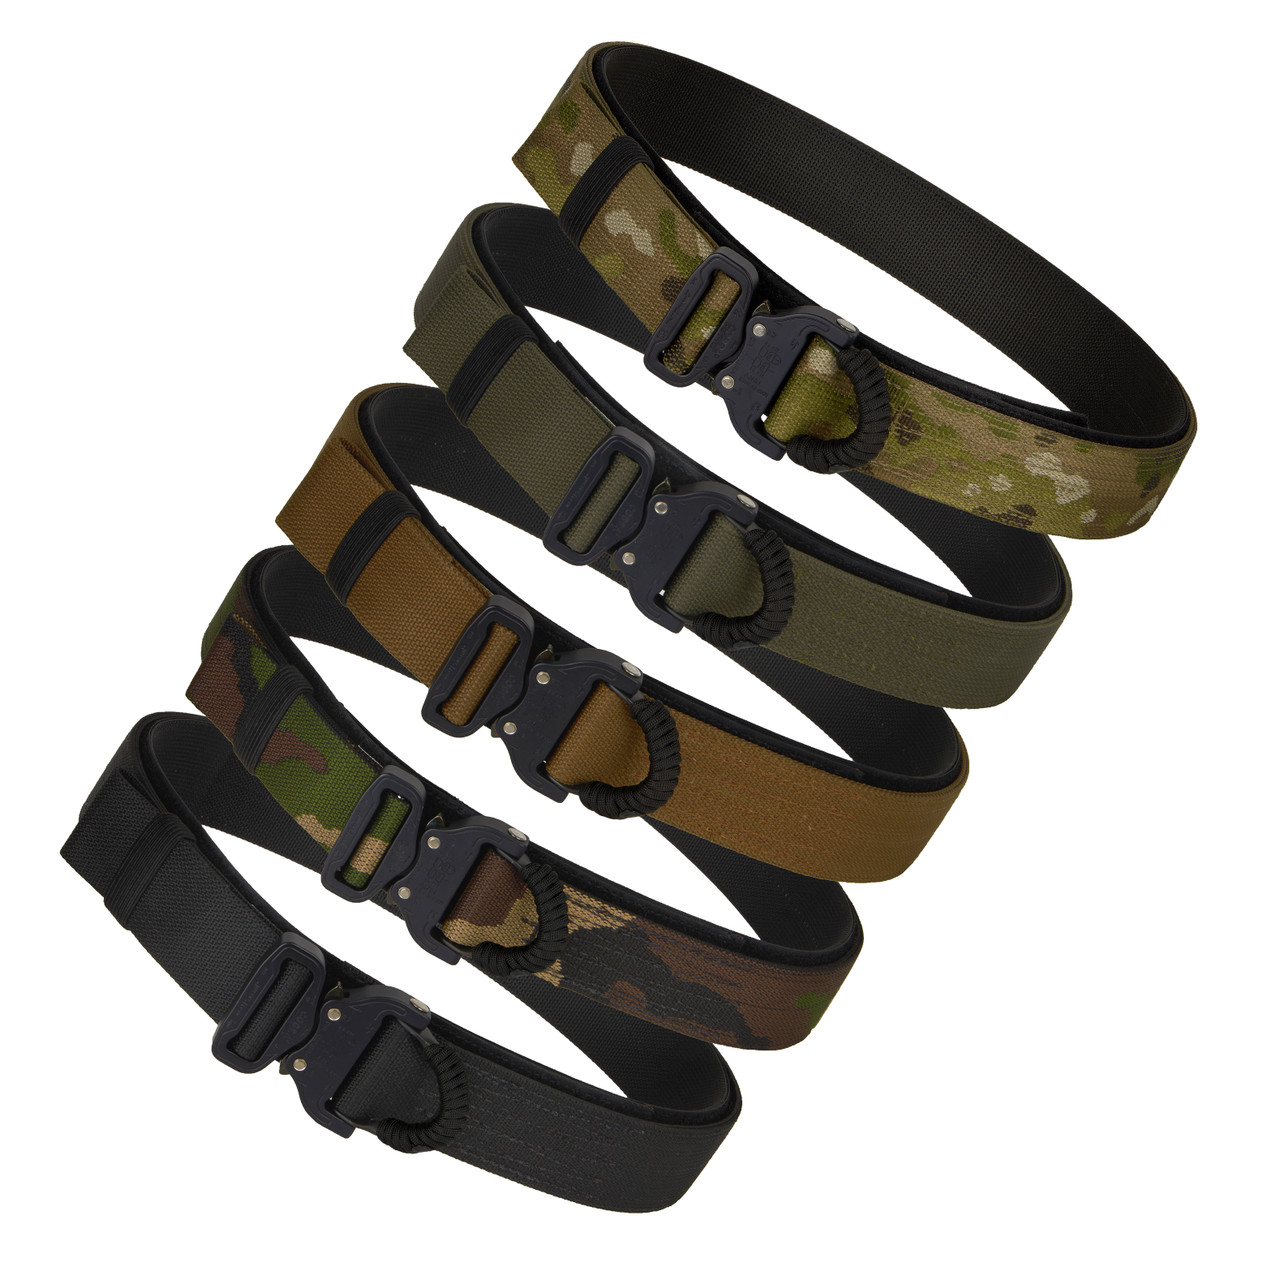 Multicam, ranger green, coyote, woodland and black tactical belt